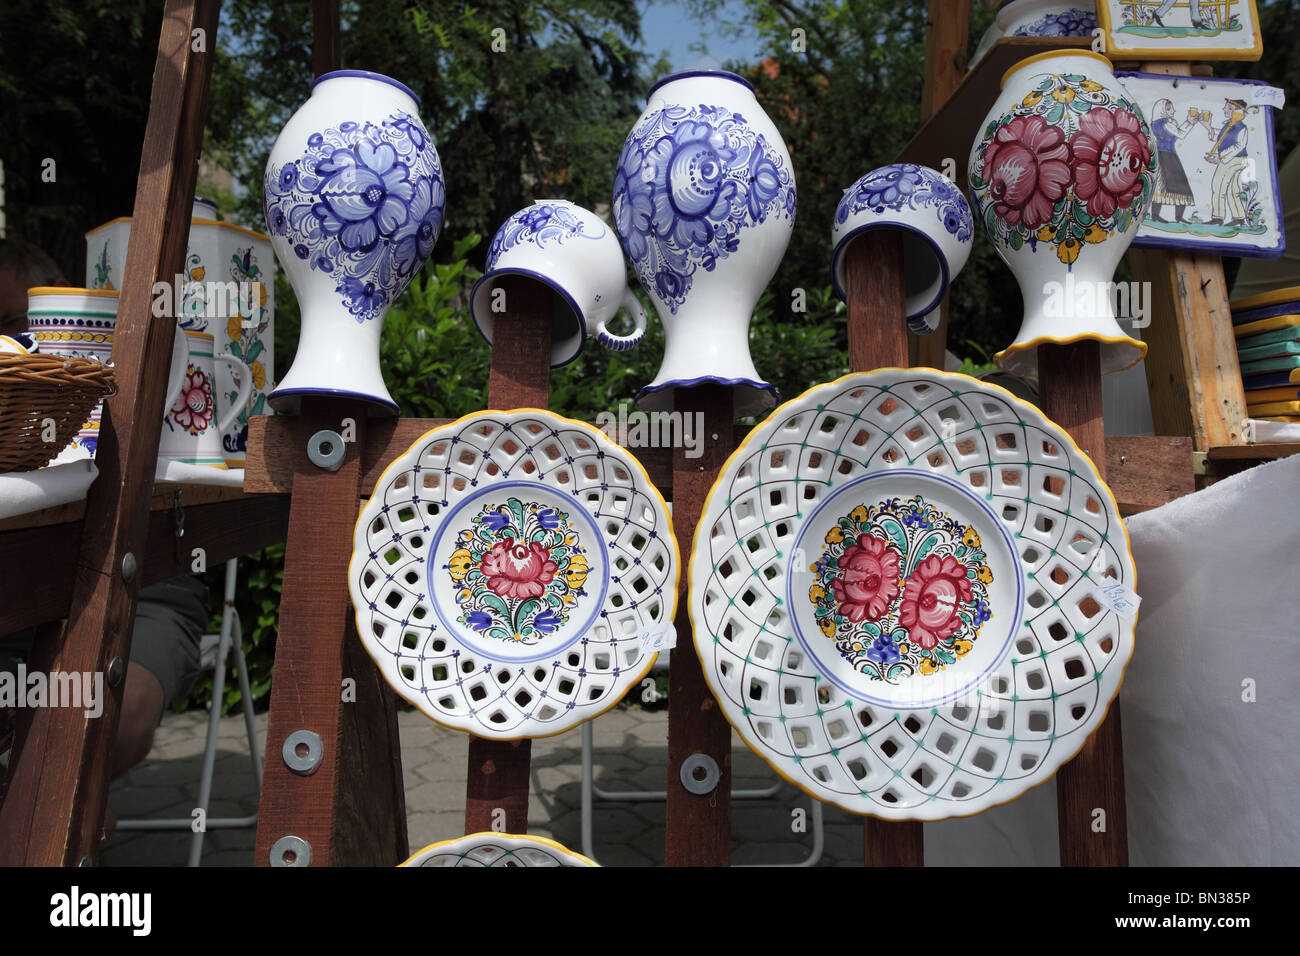 Pottery known as "Modranska keramika" on display at the pottery craft fair  in Pezinok, Slovakia Stock Photo - Alamy